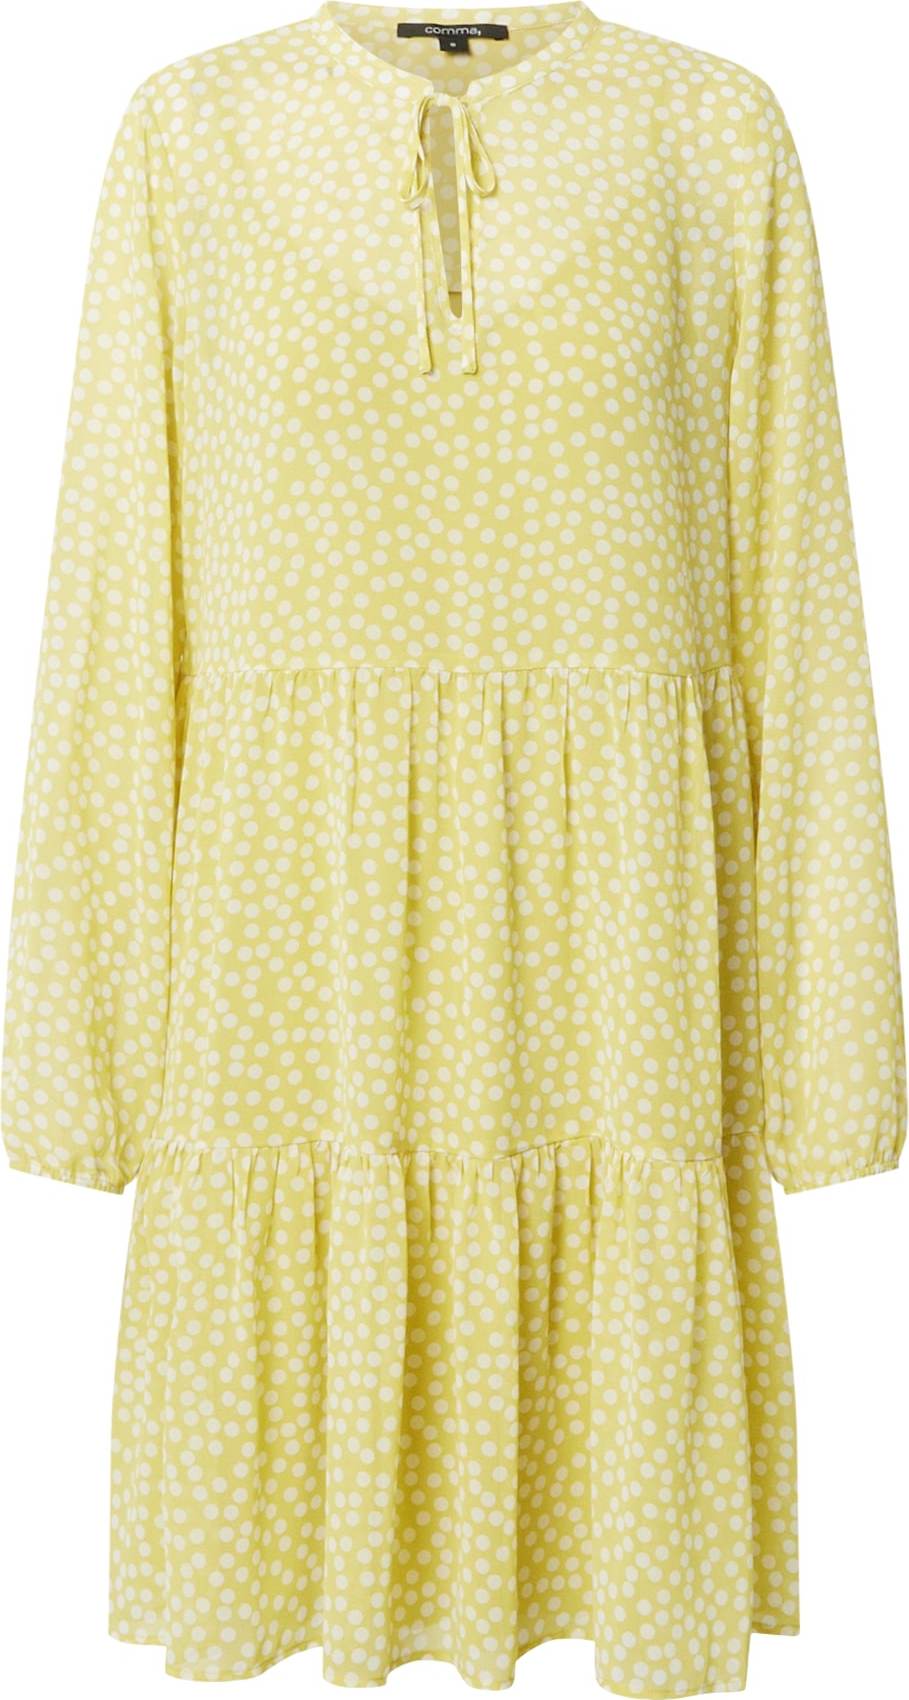 COMMA Košilové šaty žlutá / bílá